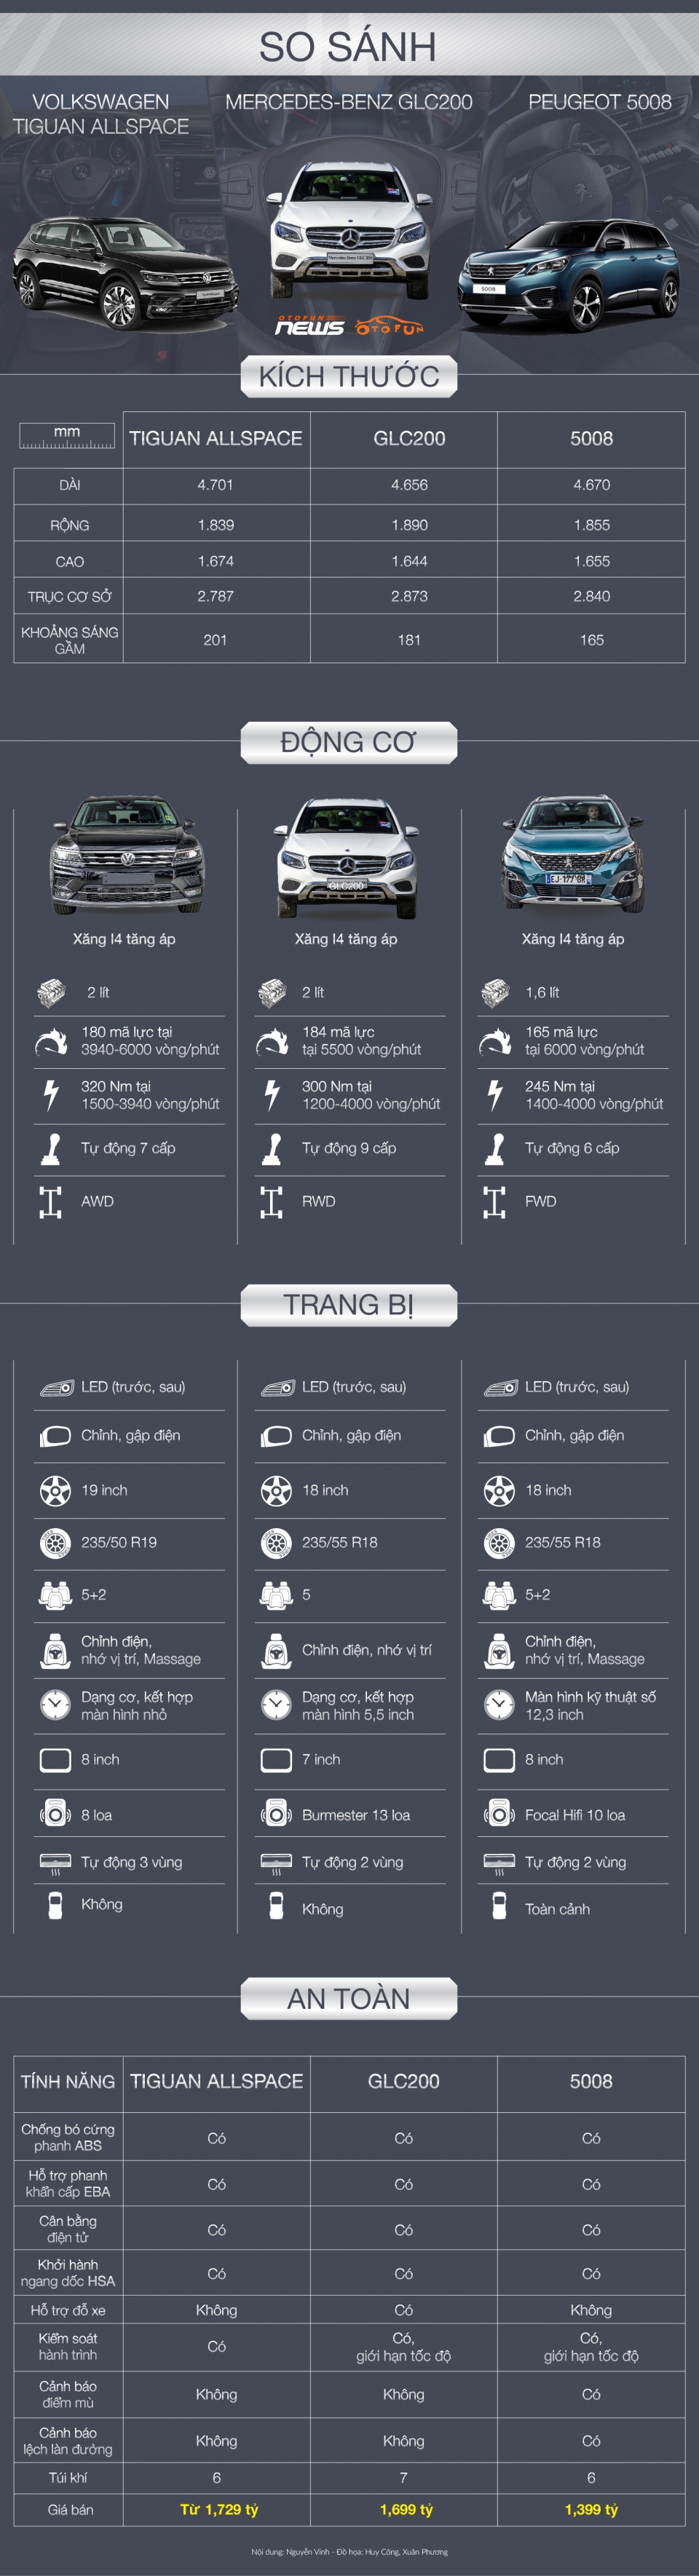 infographic so sanh volkswagen tiguan allspace mercedes benz glc200 va peugeot 5008